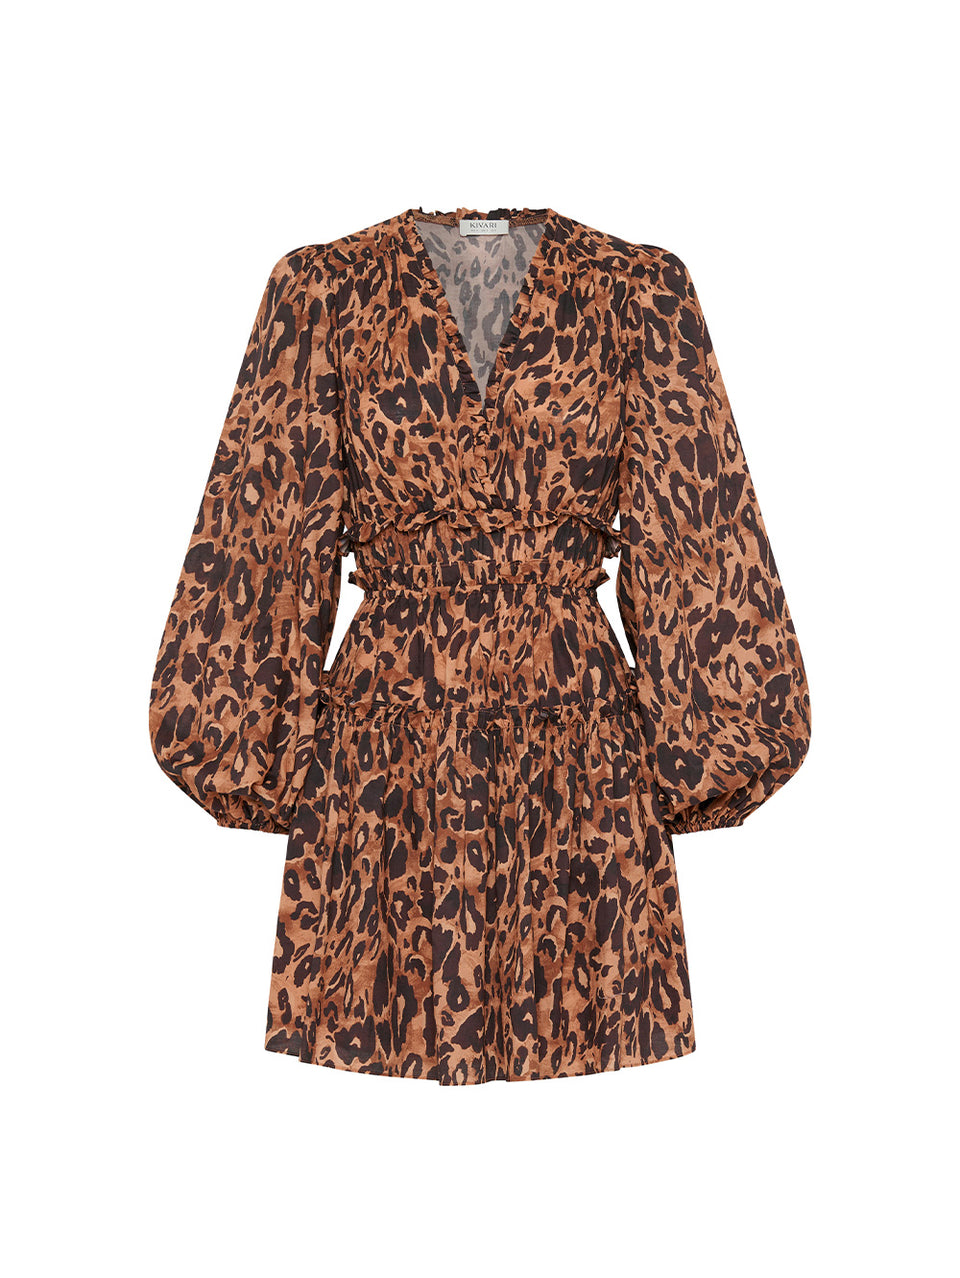 Madison Mini Dress KIVARI | Orange and brown leopard mini dress